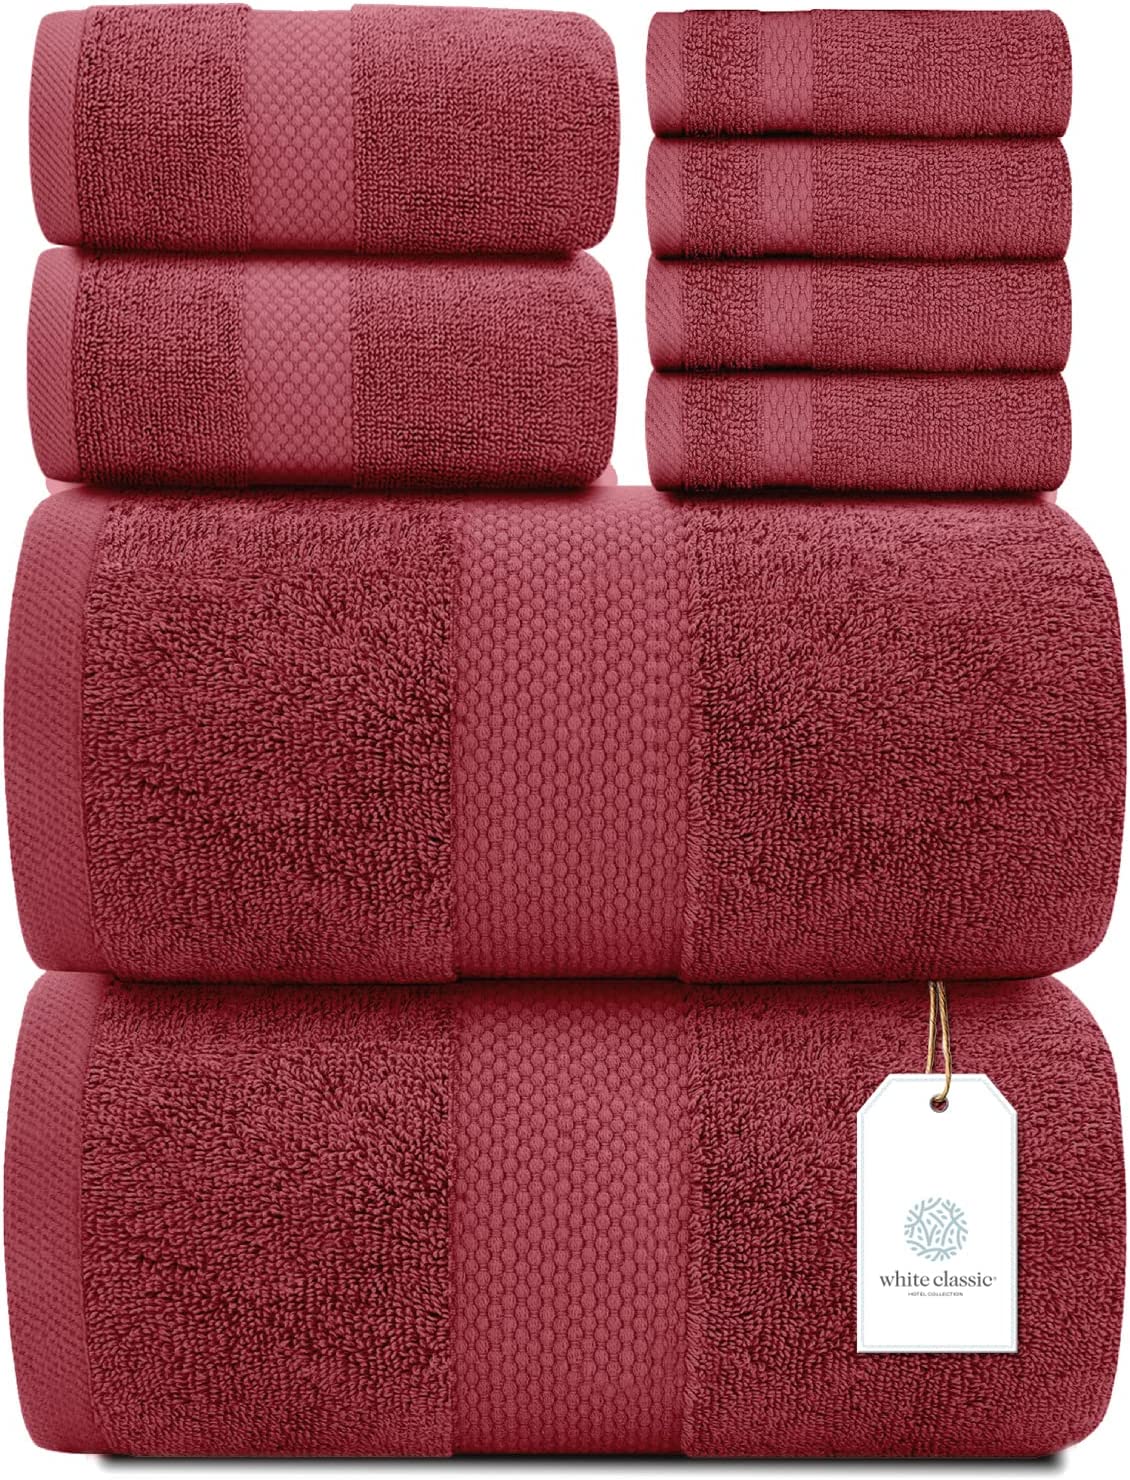 Hotel Collection Luxury 16 Bath Towels | 16 Hand Towels | 32 Washcloths - [64 Piece Set]